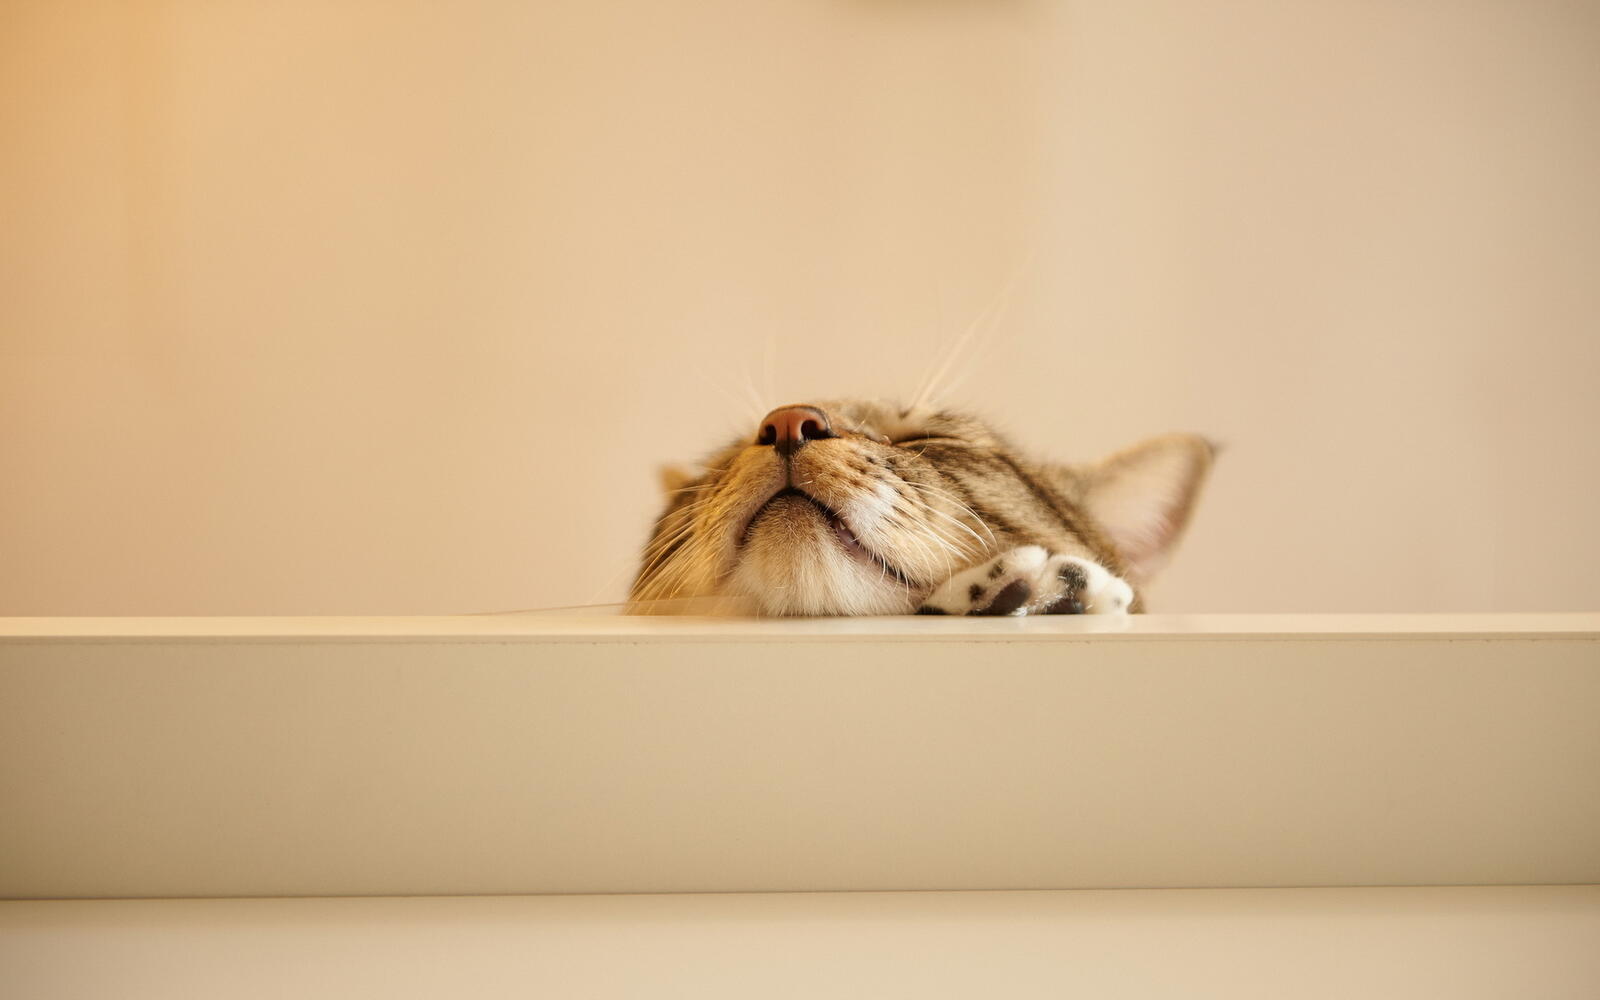 Wallpapers cat sleeping muzzle on the desktop